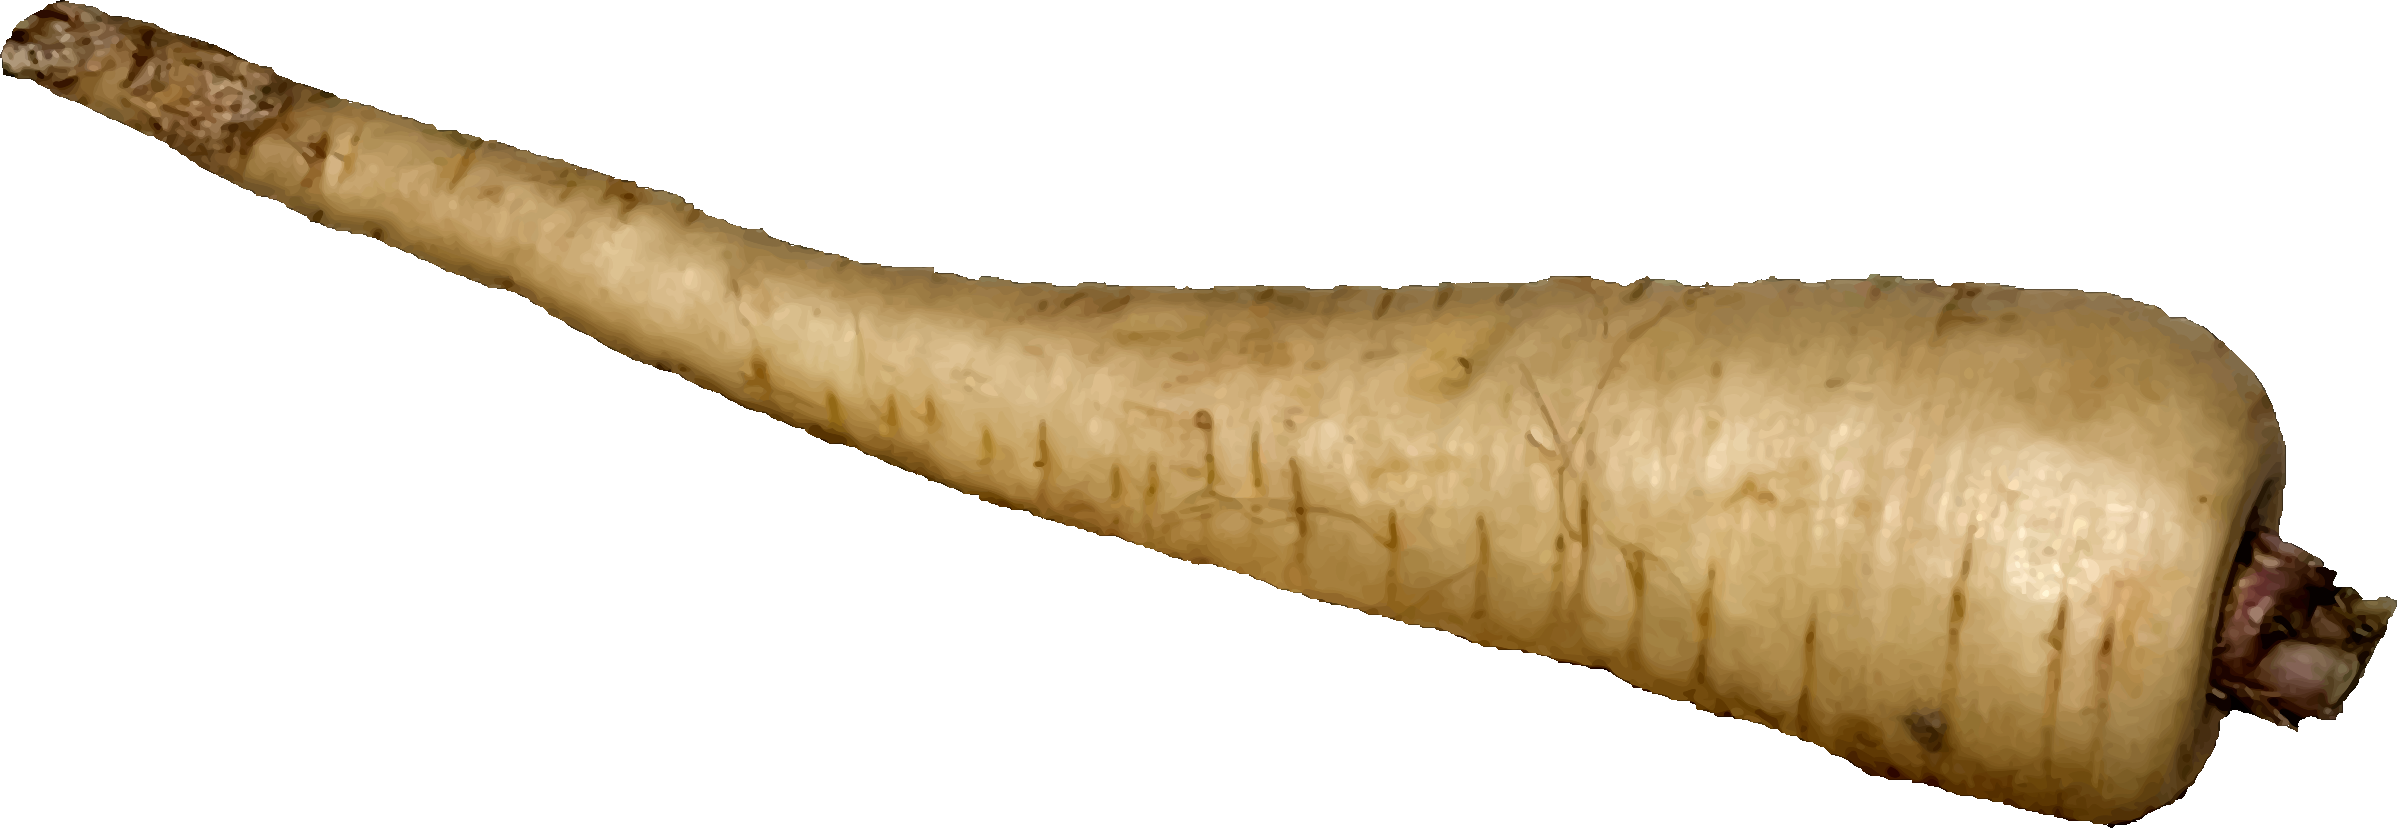 Horseradish PNG Free Image